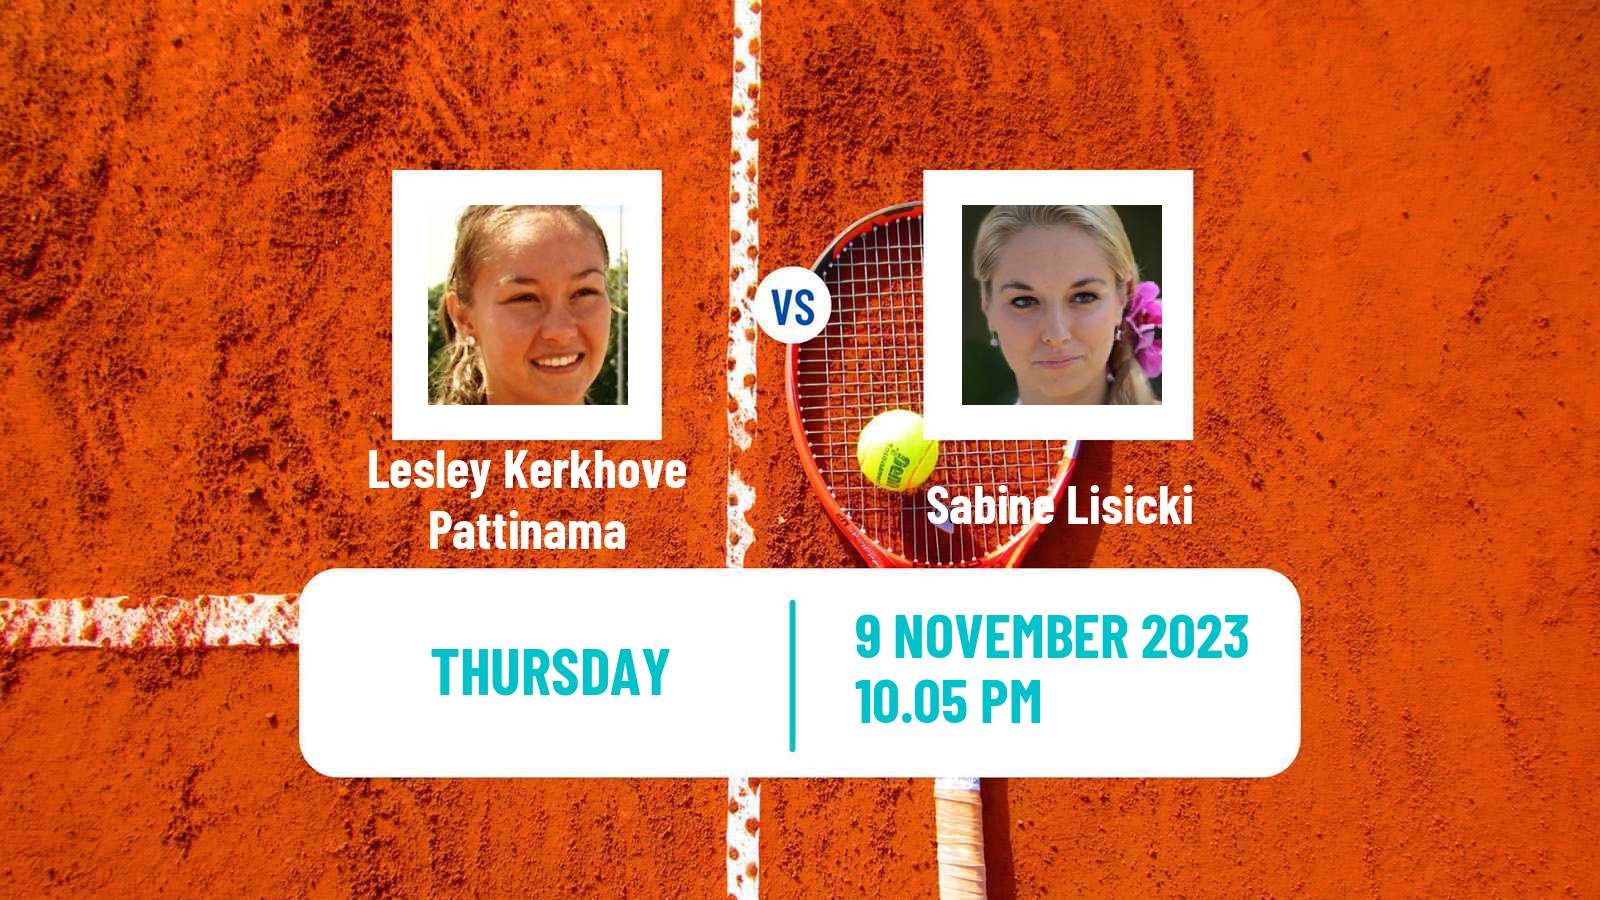 Tennis ITF W60 H Calgary Women Lesley Kerkhove Pattinama - Sabine Lisicki